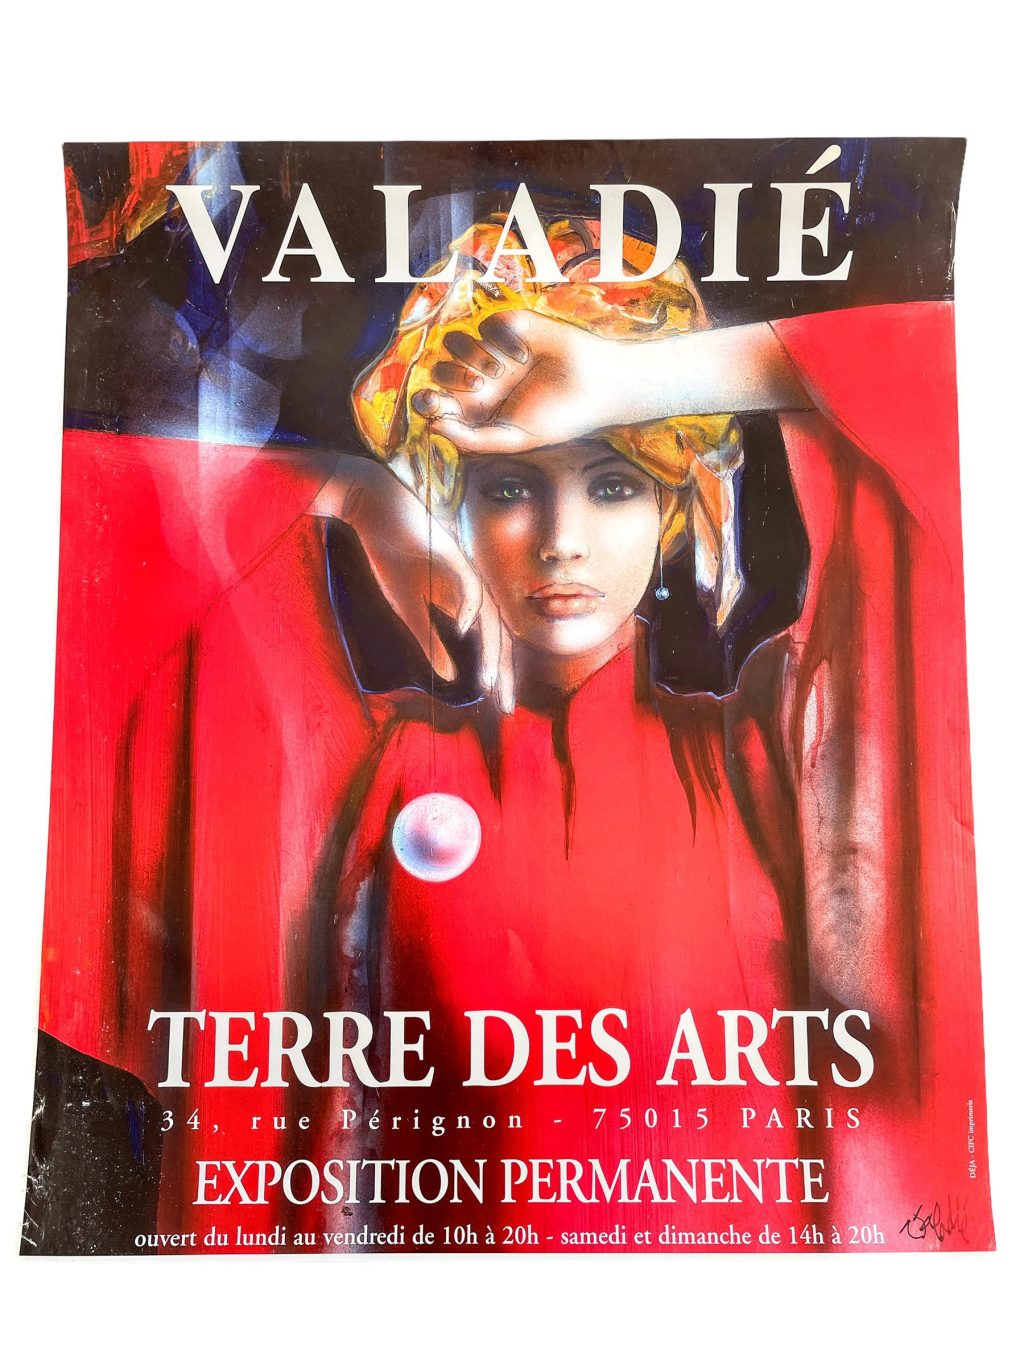 Vintage French Valadie Galerie Terre Des Arts Paris Gallery Original Exhibition Poster Wall Decor Painting Display Artwork c1990’s / EVE